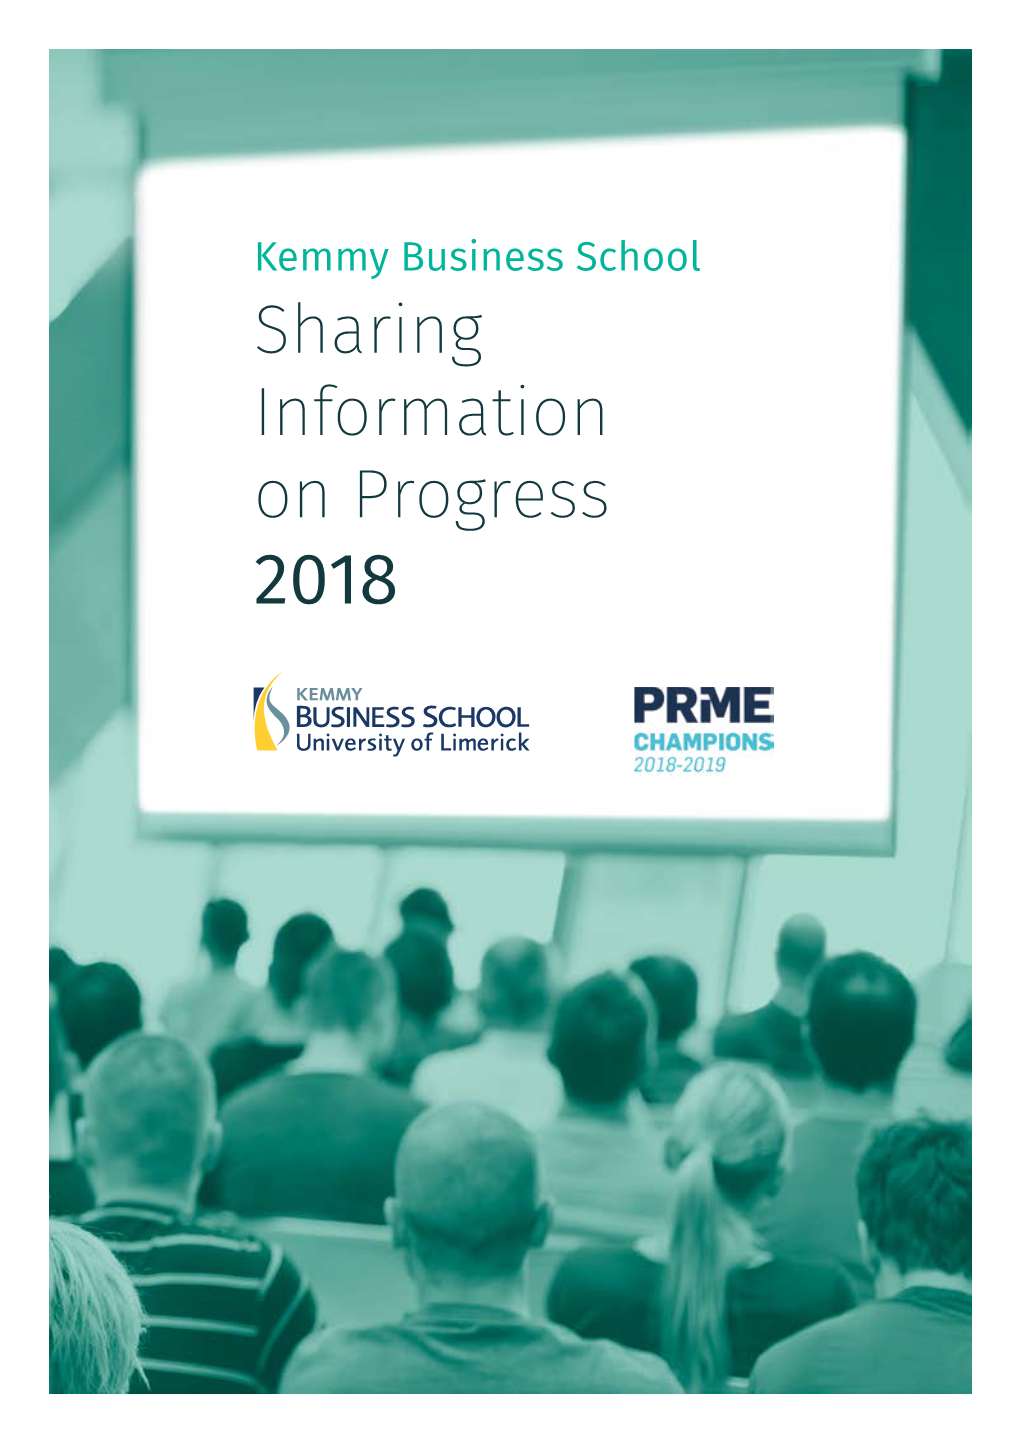 Kemmy Business School Sharing Information on Progress 2018 Letter of Commitment